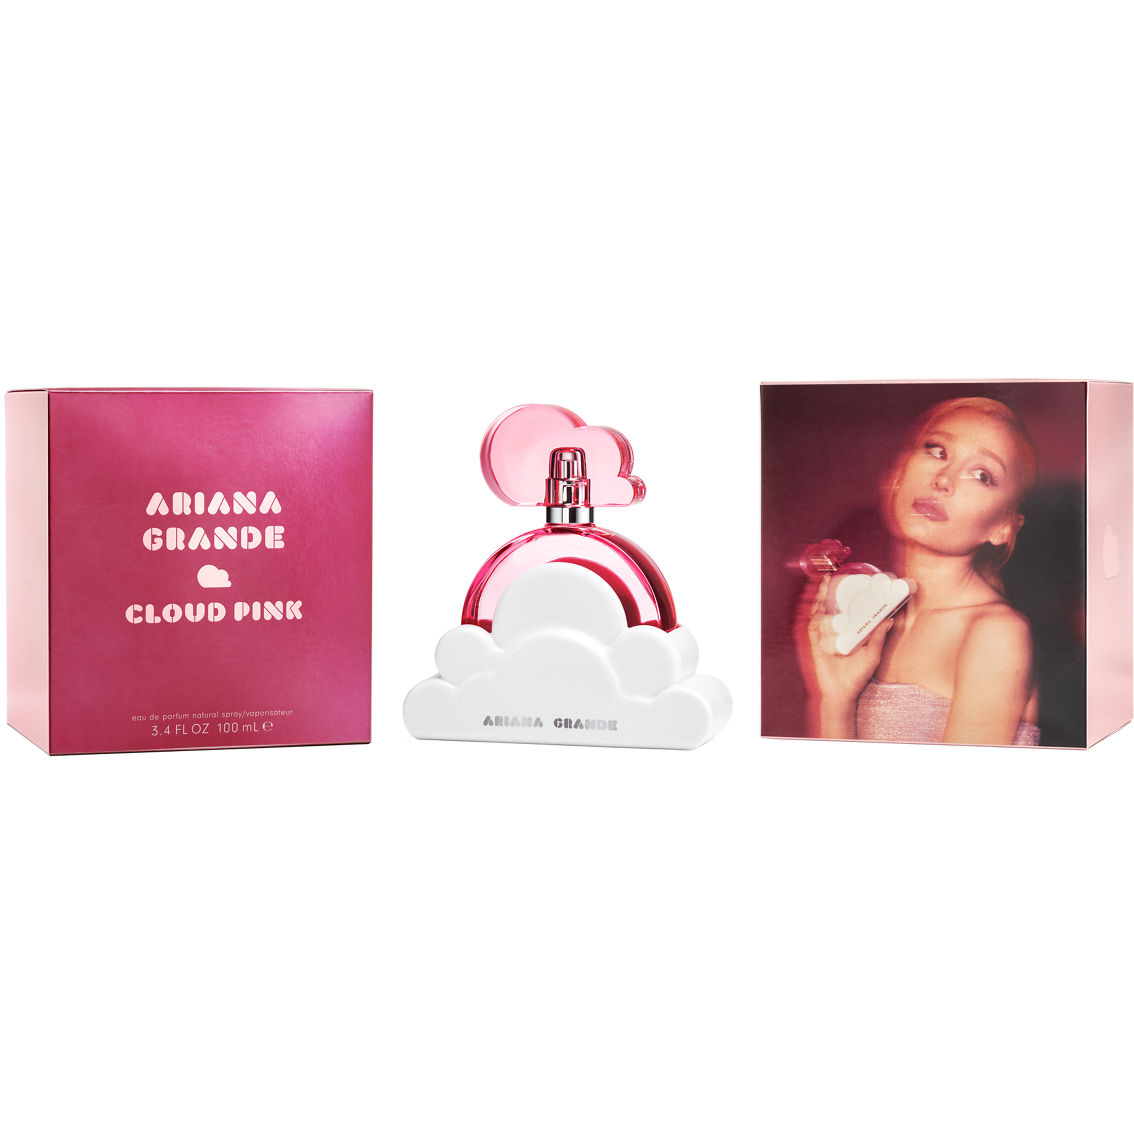 Ariana Grande Cloud Pink Eau de Parfum - Image 2 of 2